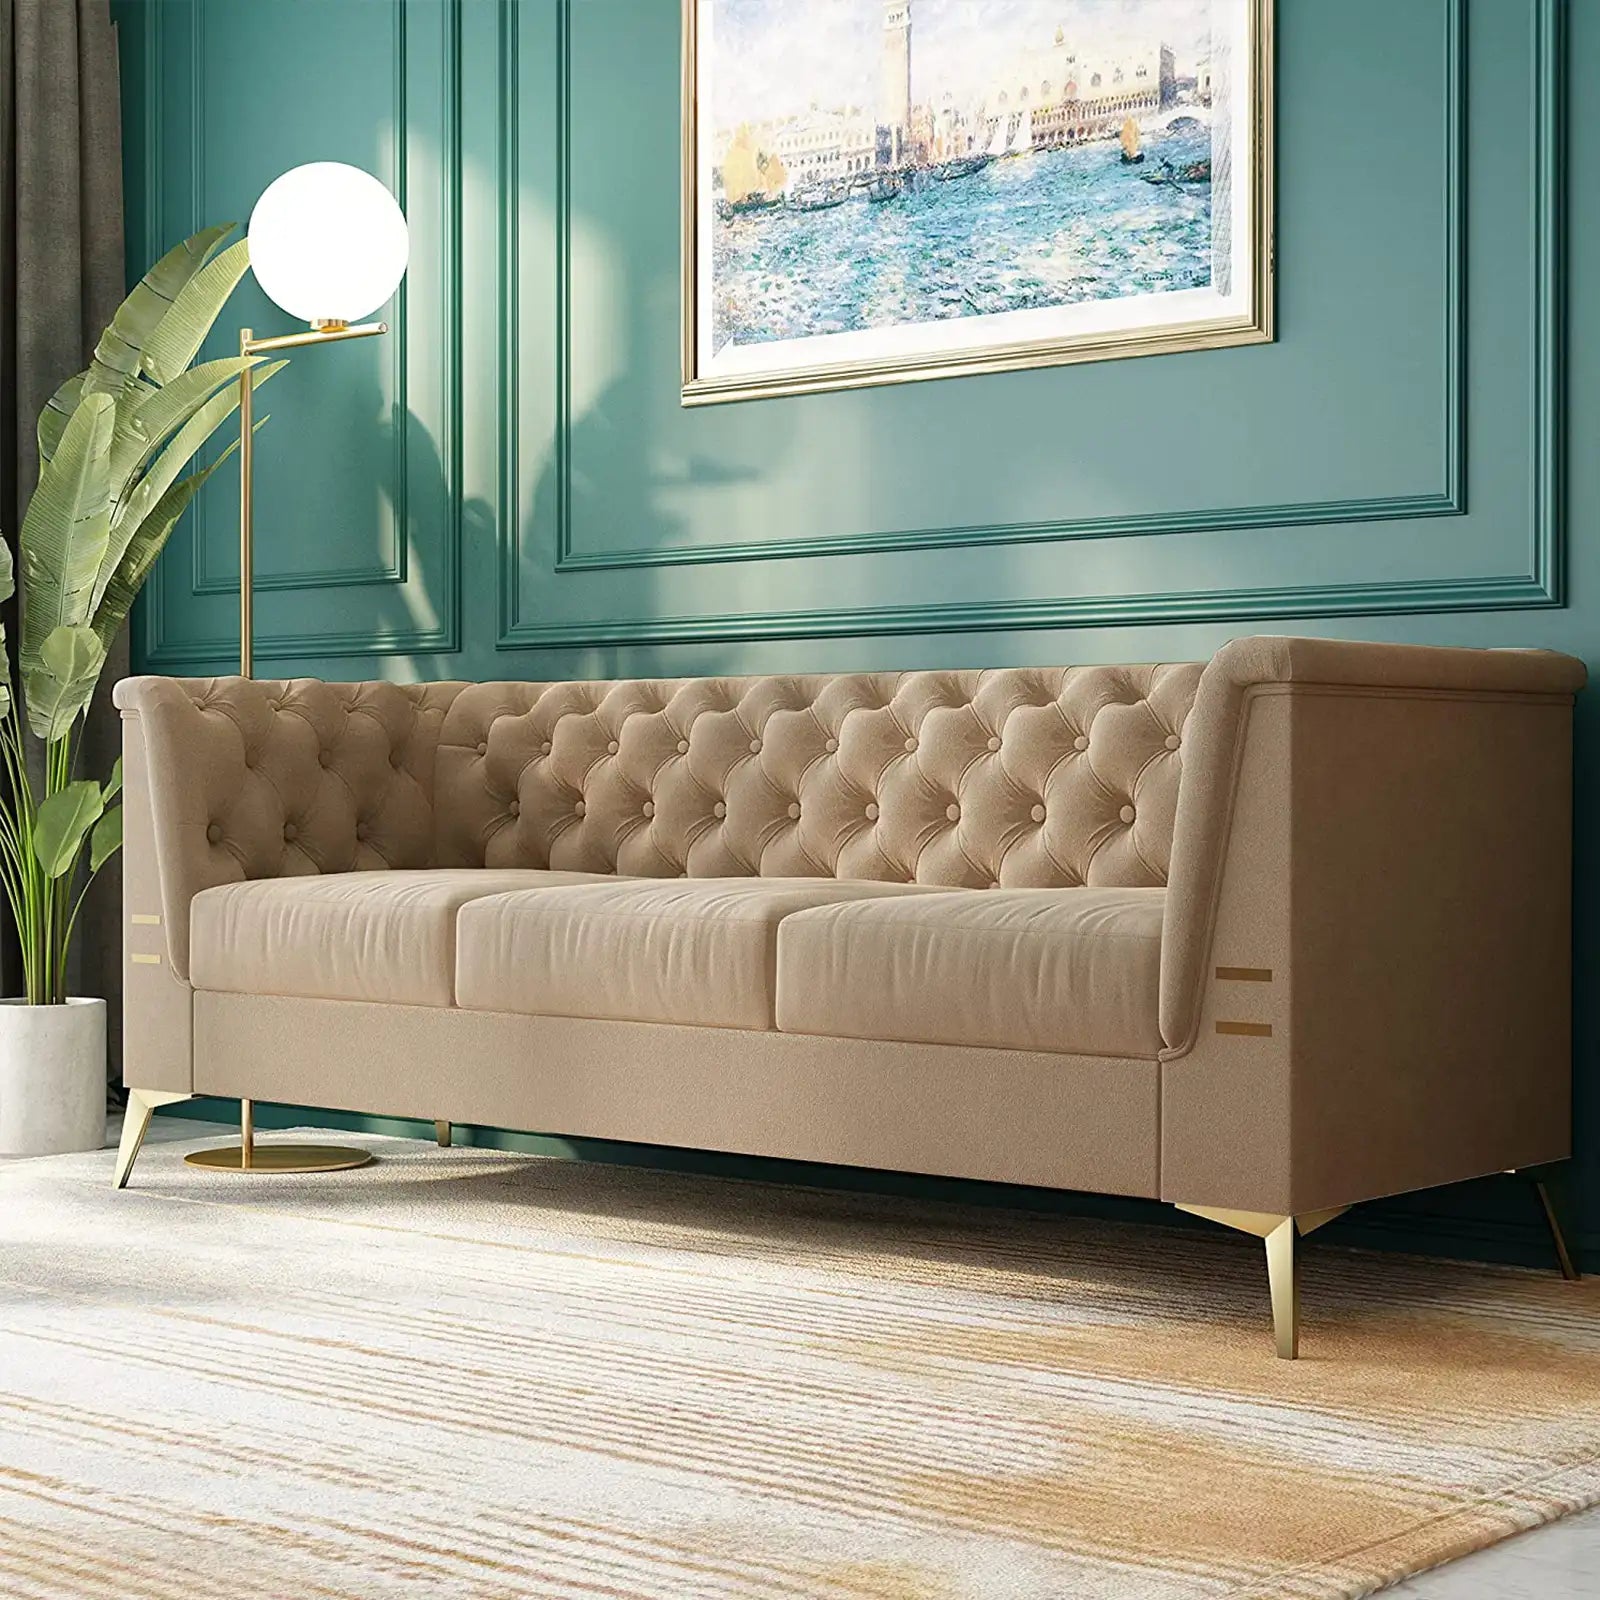 Velvet Fabric Button Tufted Sofa for Living Room,Bedroom or Office